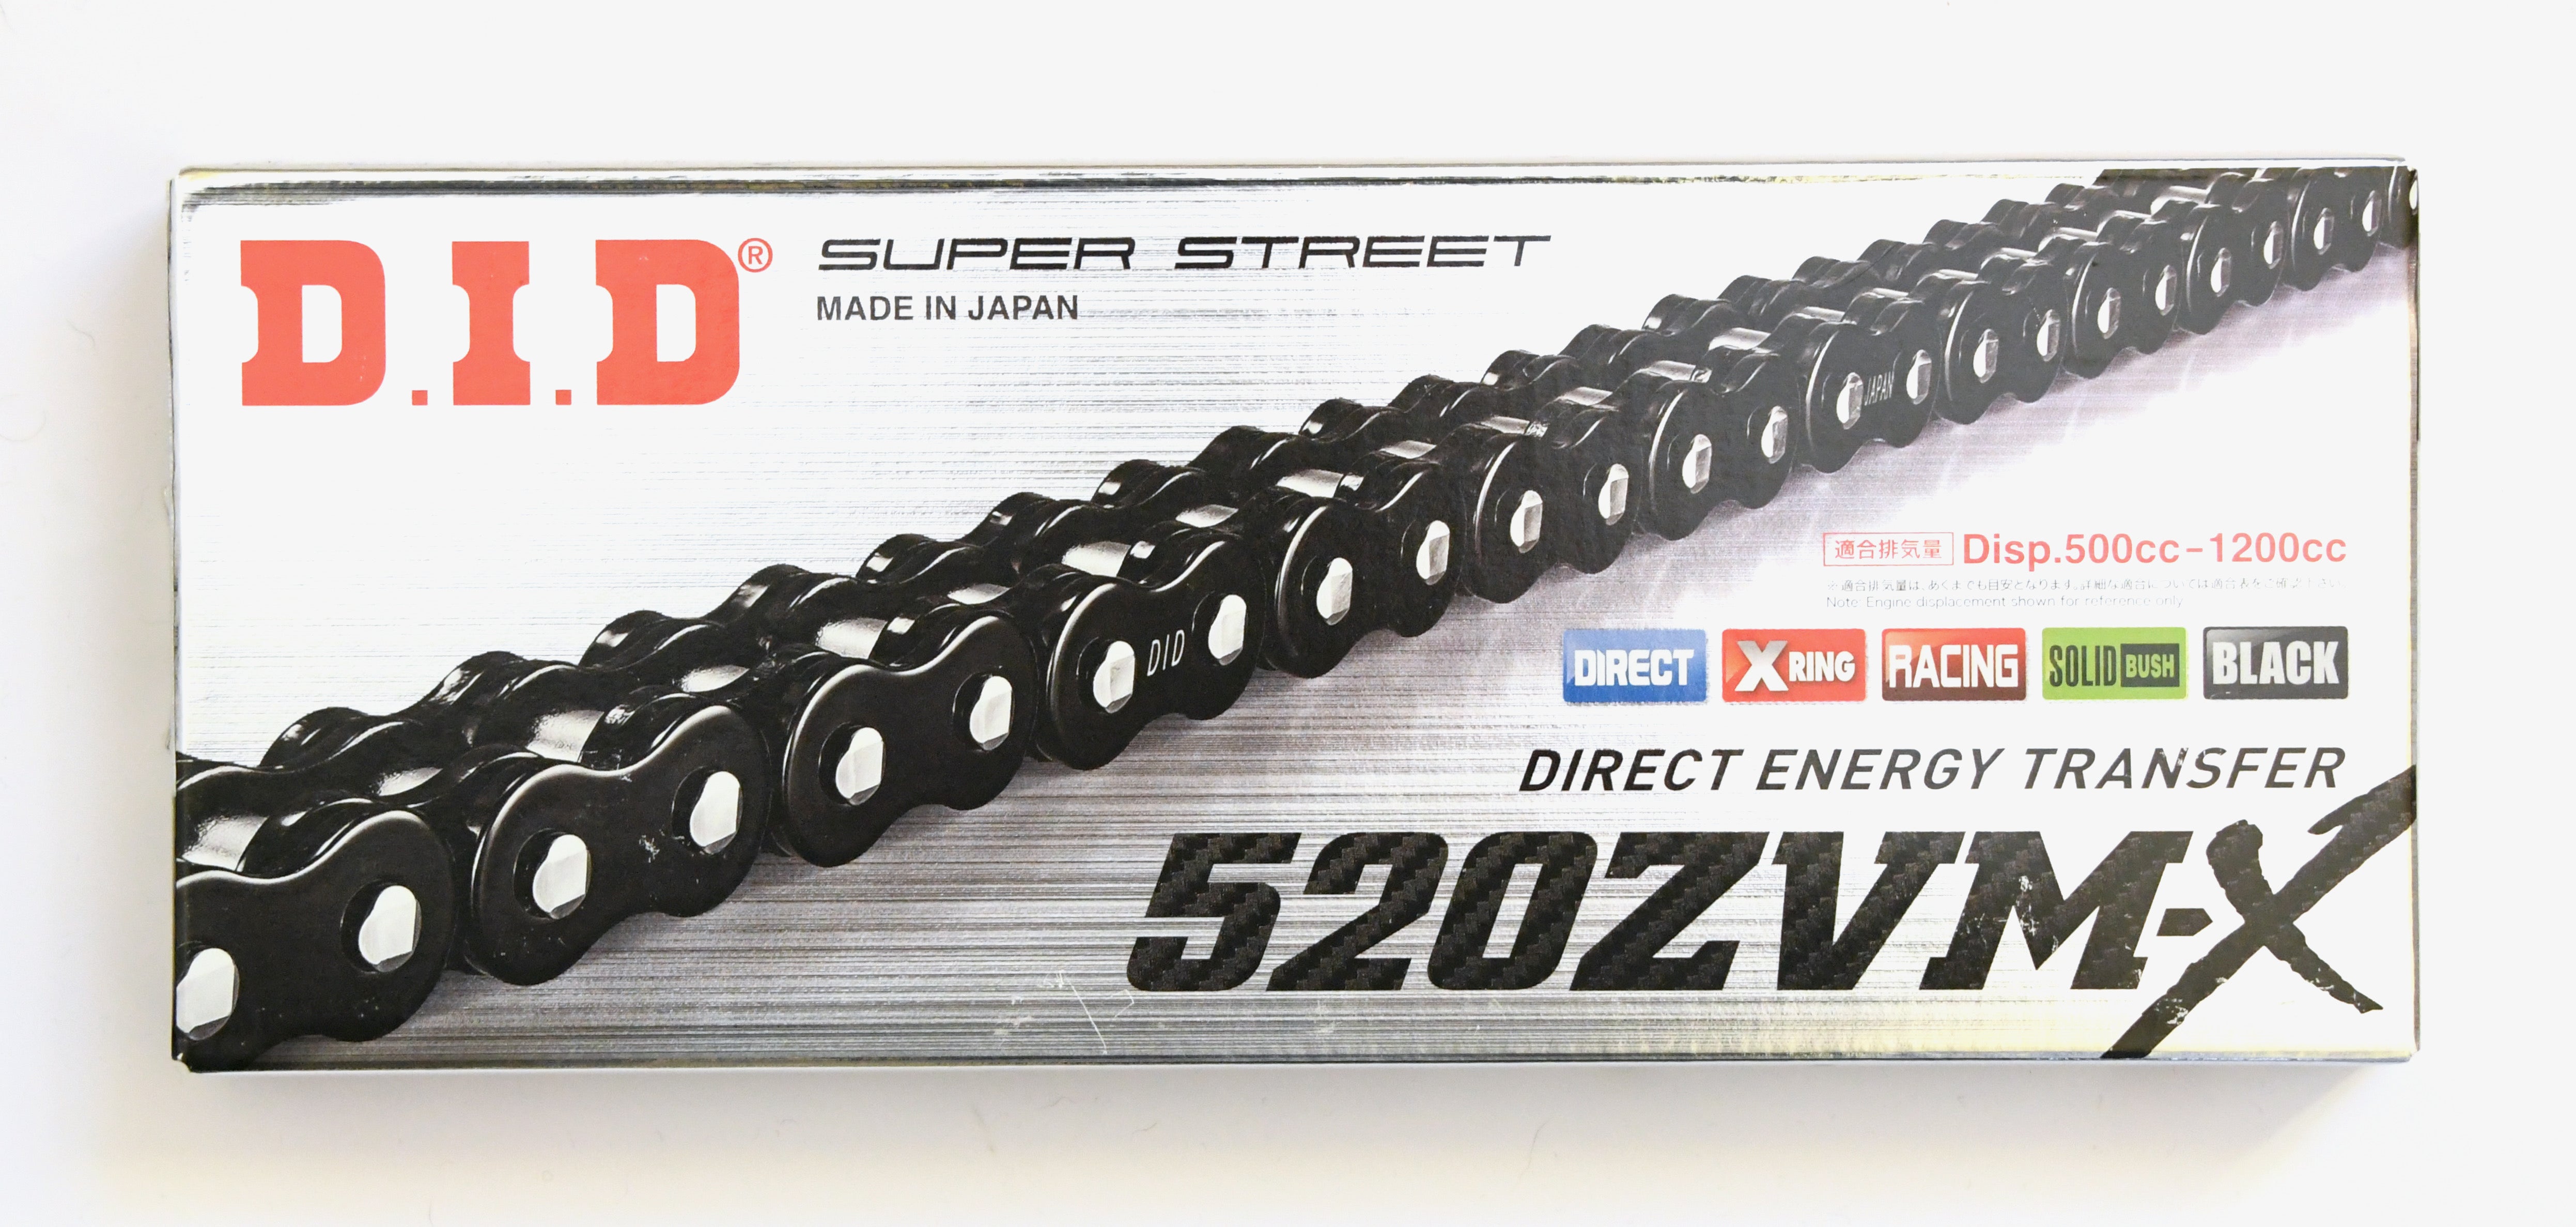 DID 520 ZVMX Super Street Extra Heavy Duty Chain 110 Links - Black